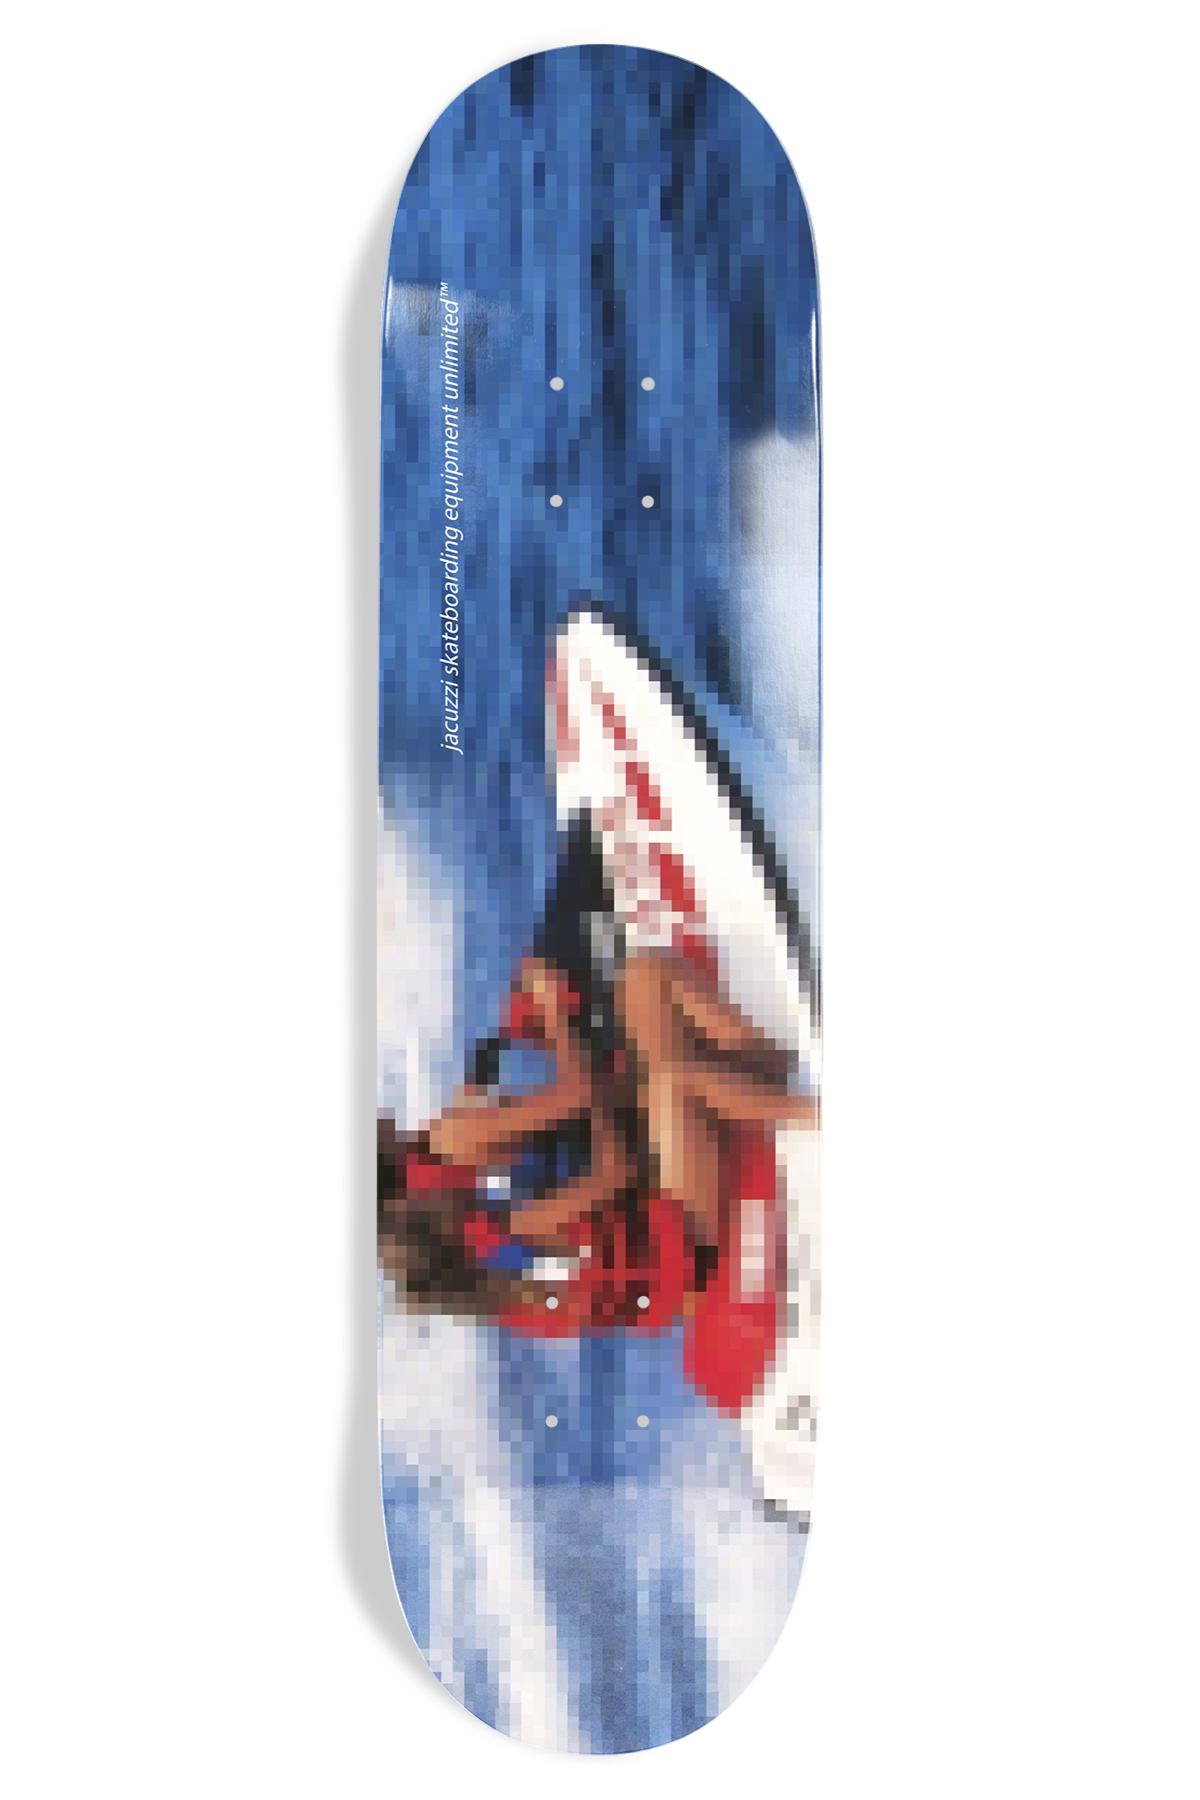 Jacuzzi Unlimited Sea Monsters Ex7 Skateboard Deck - 8.0"